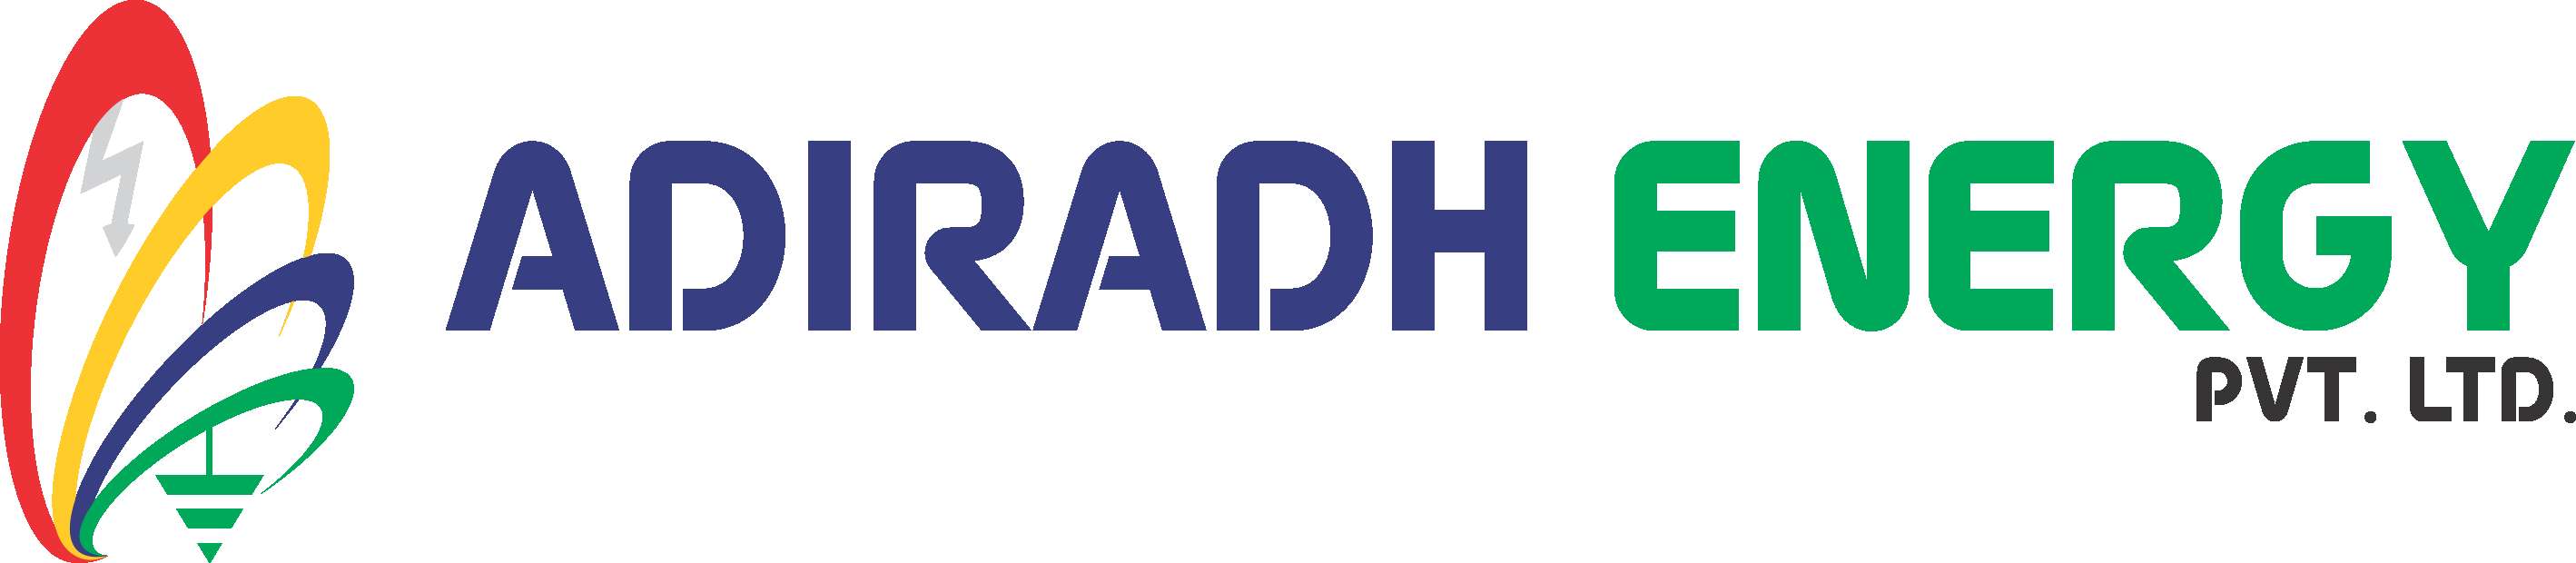 Adiradh Energy Pvt Ltd